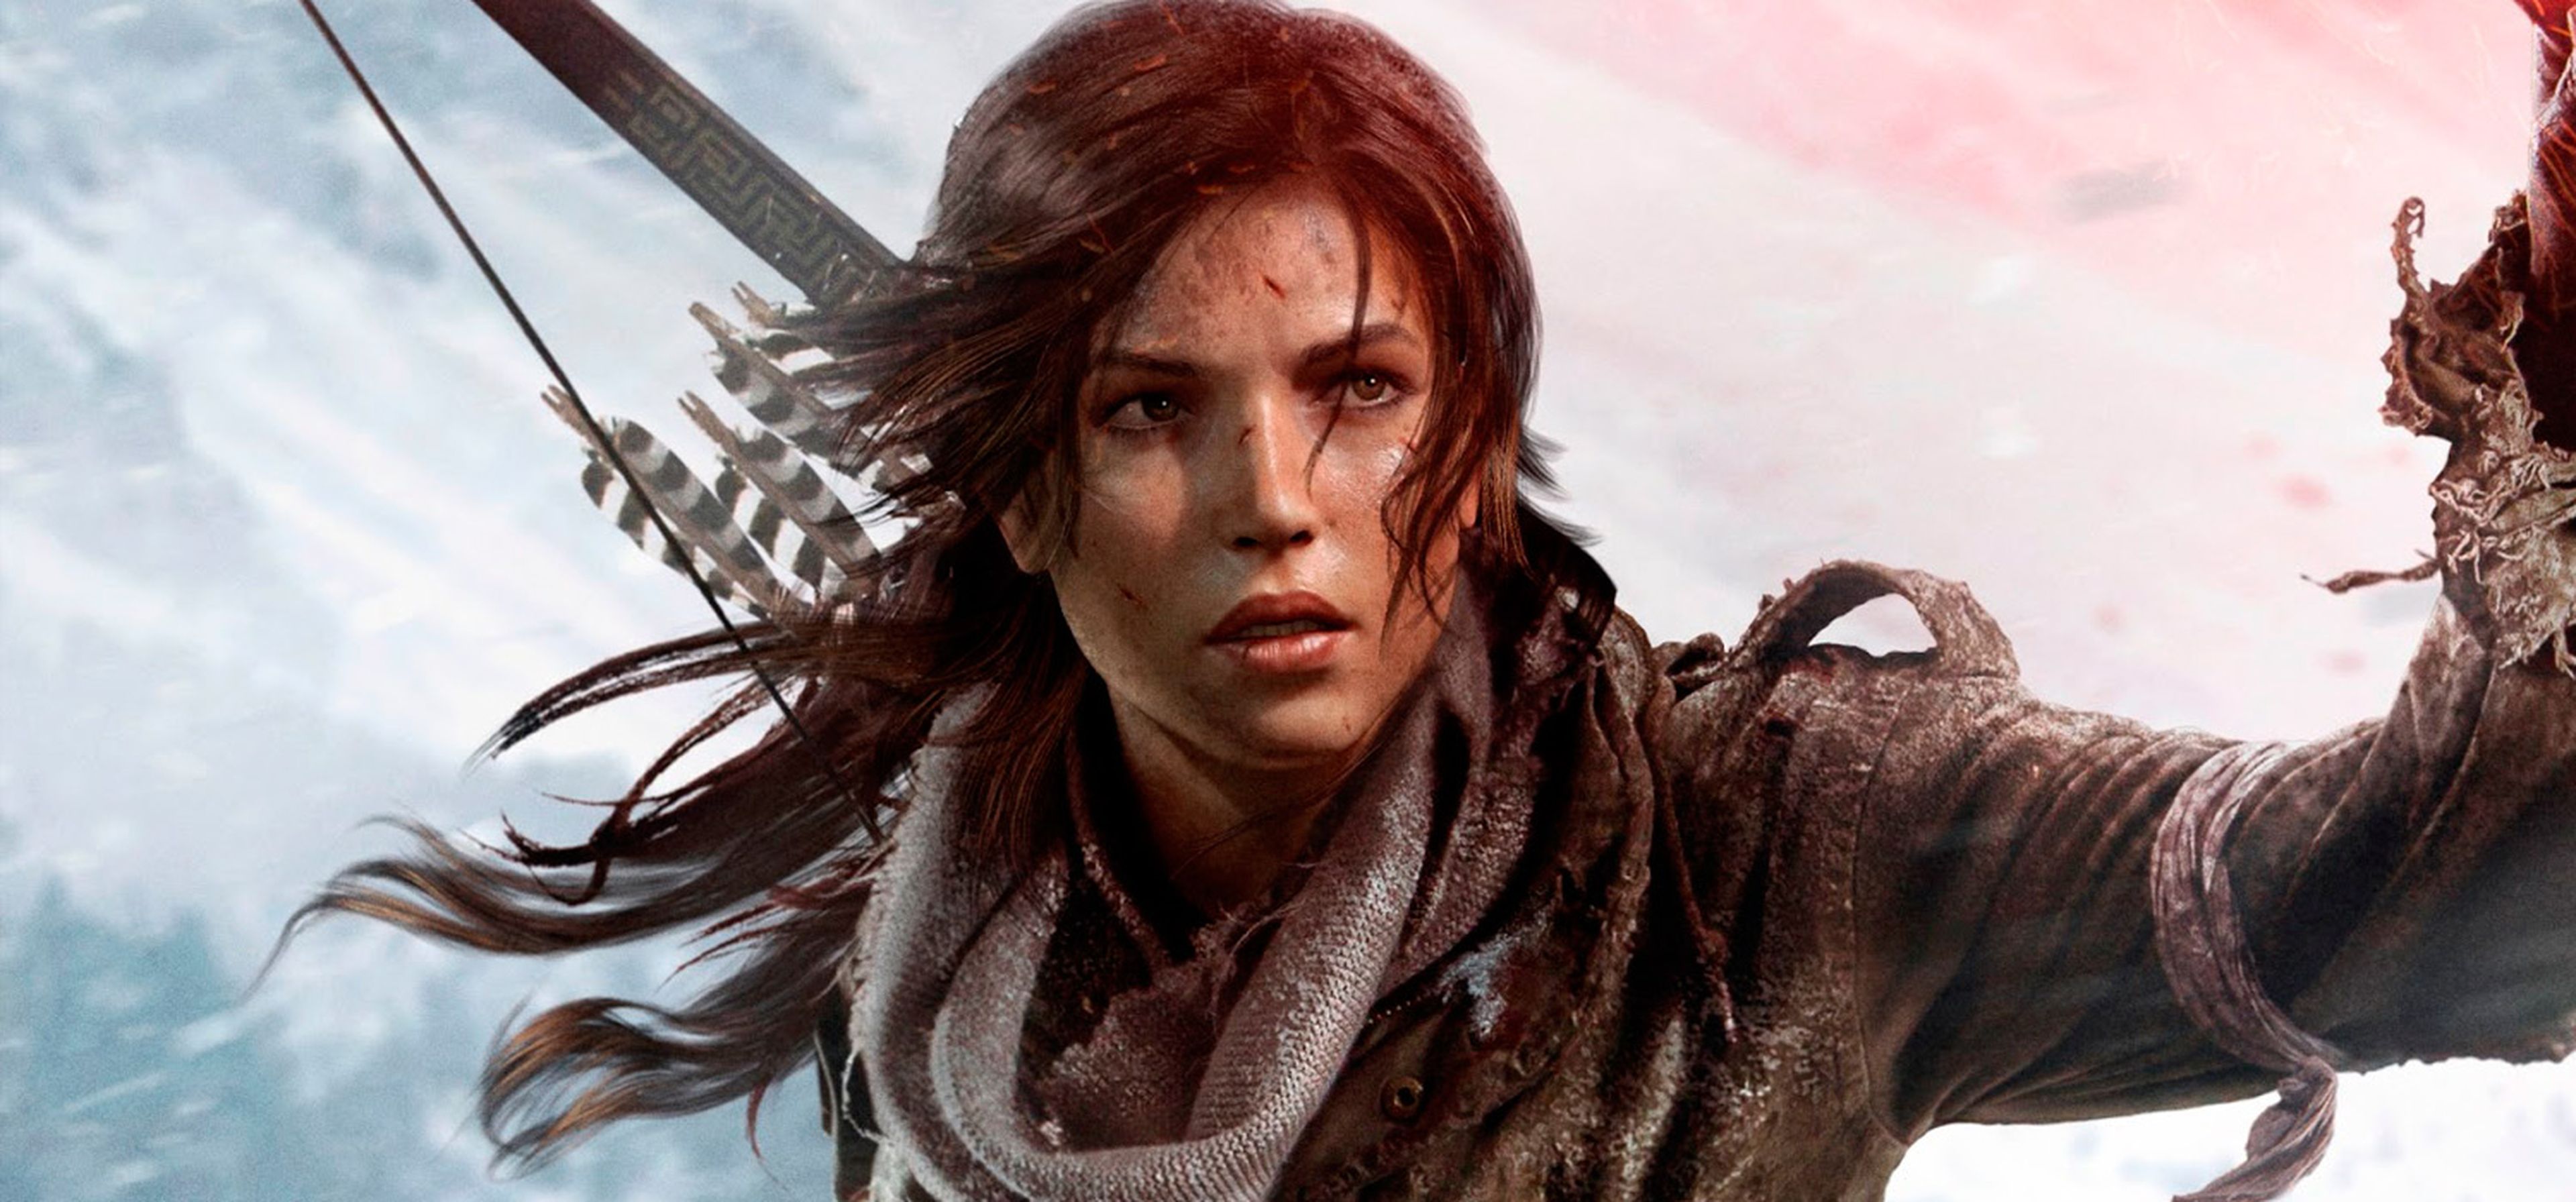 Principal Rise of the Tomb Raider